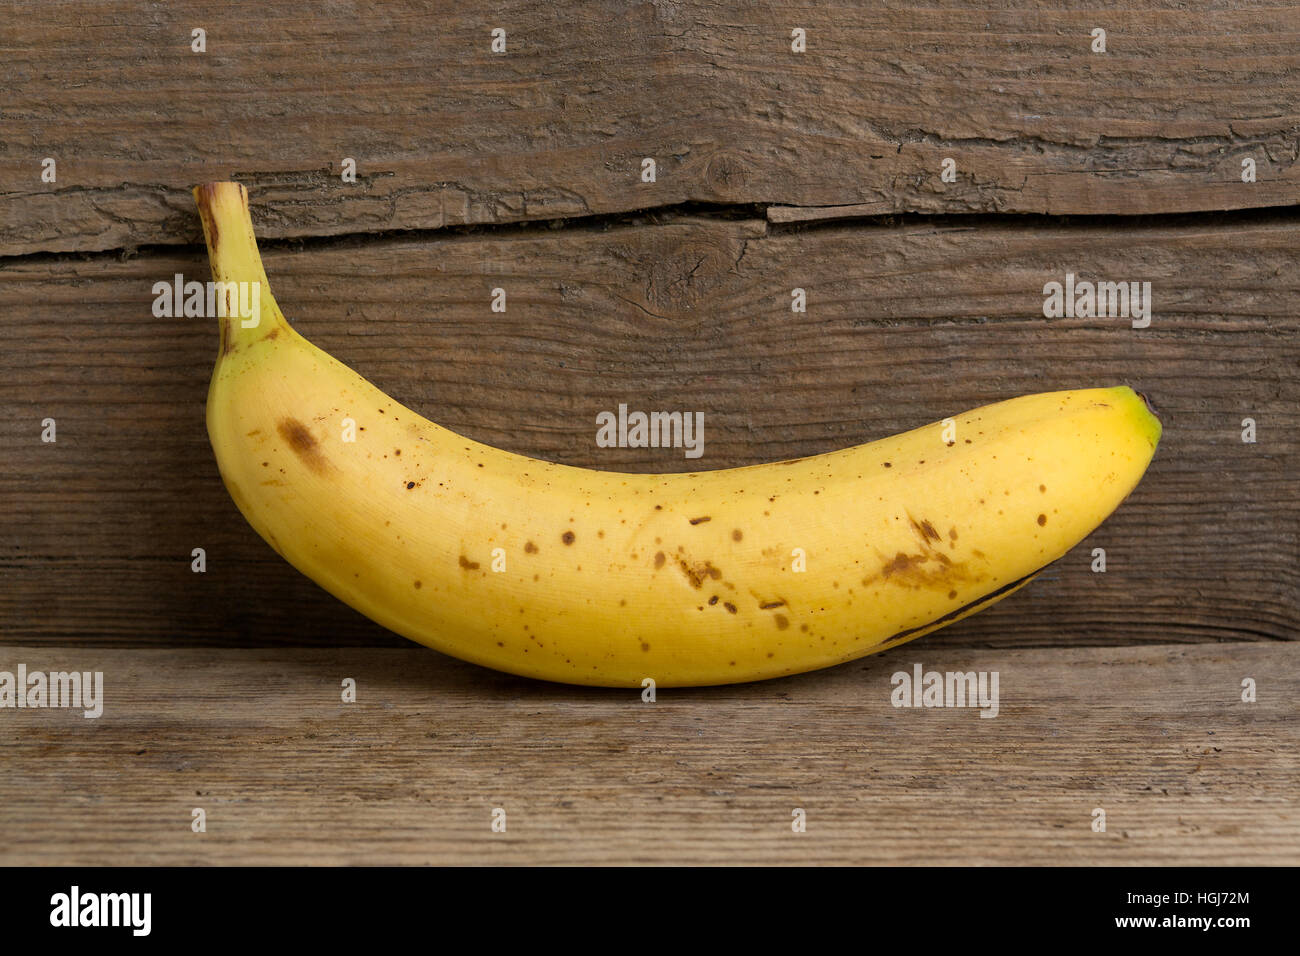 Banana on wooden background Stock Photo